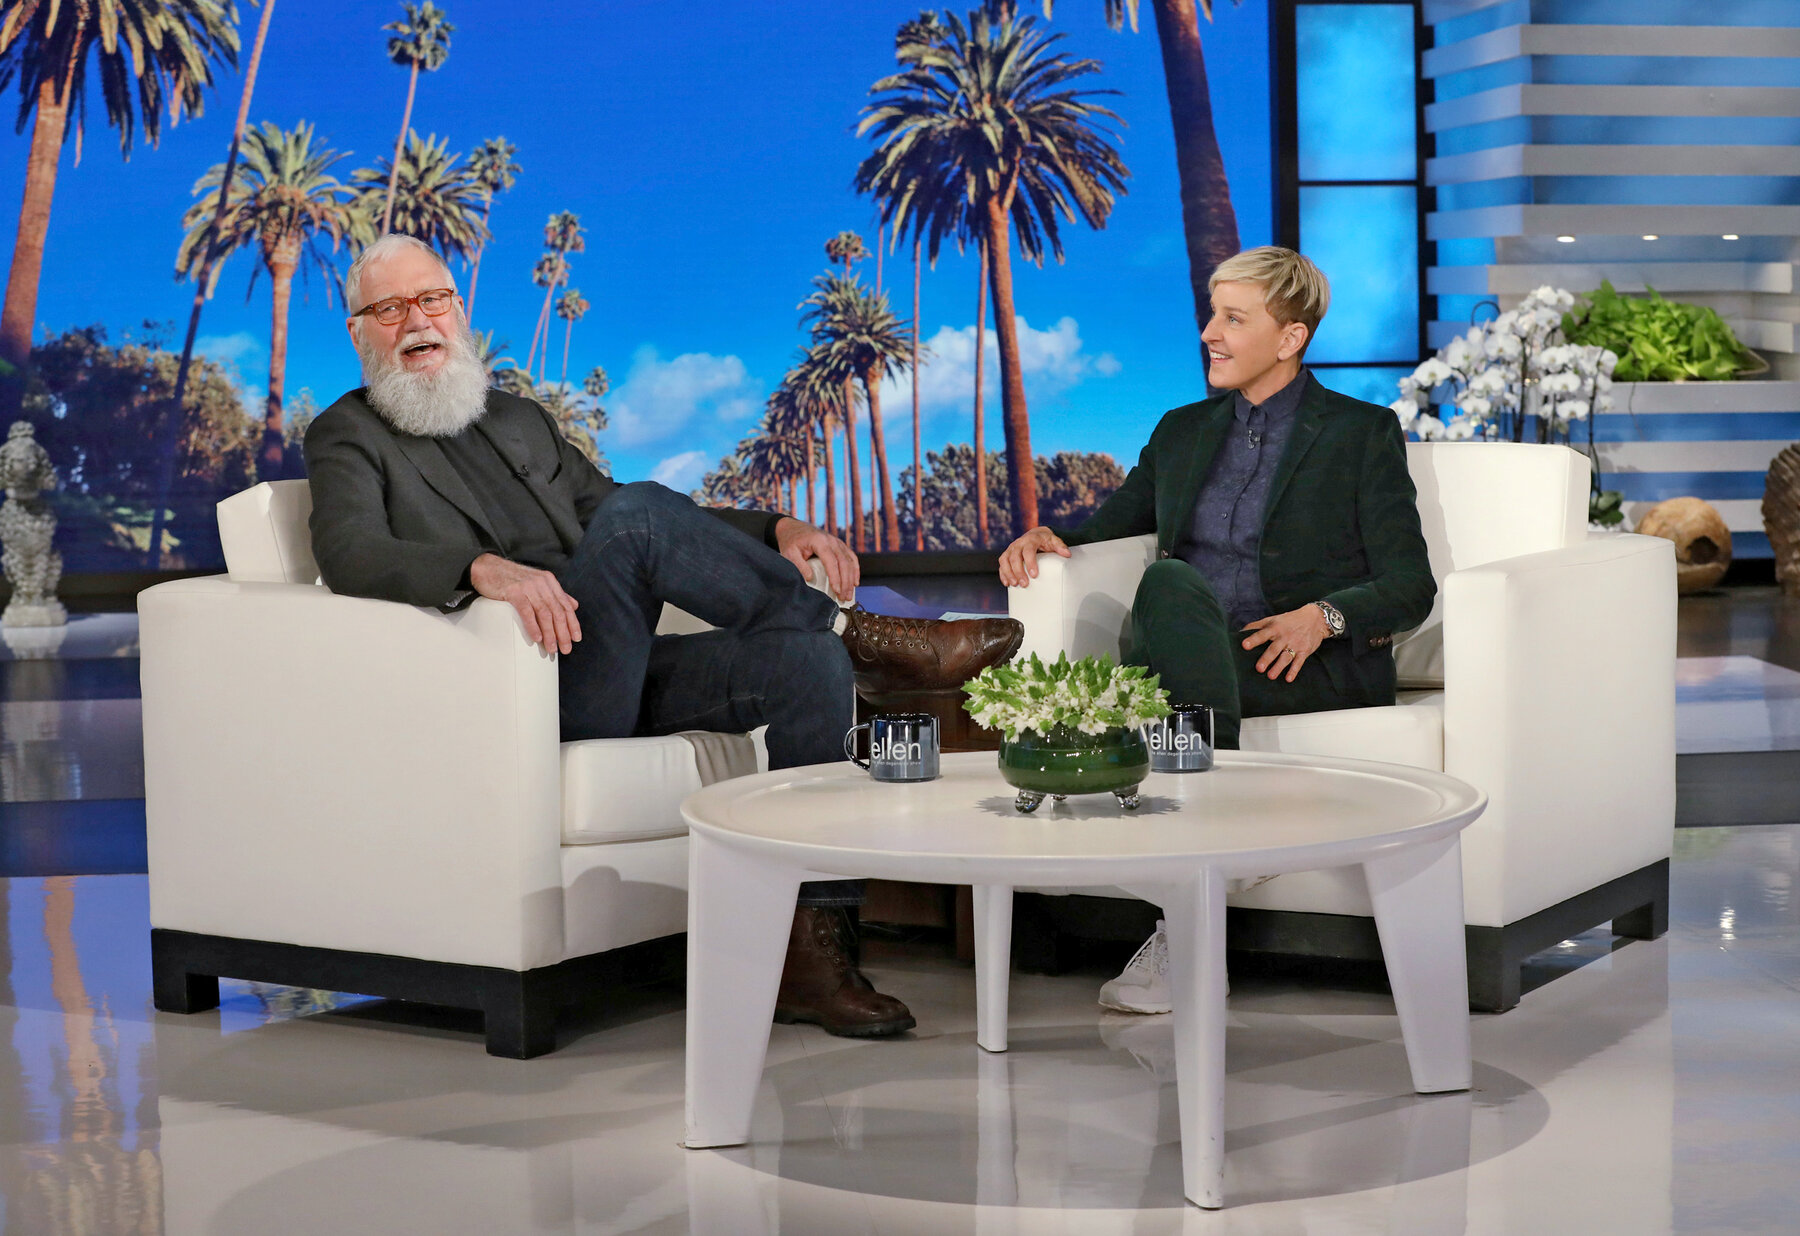 Ellen DeGeneres Final Season of Talk Show A Happy Place! The Ellen Show